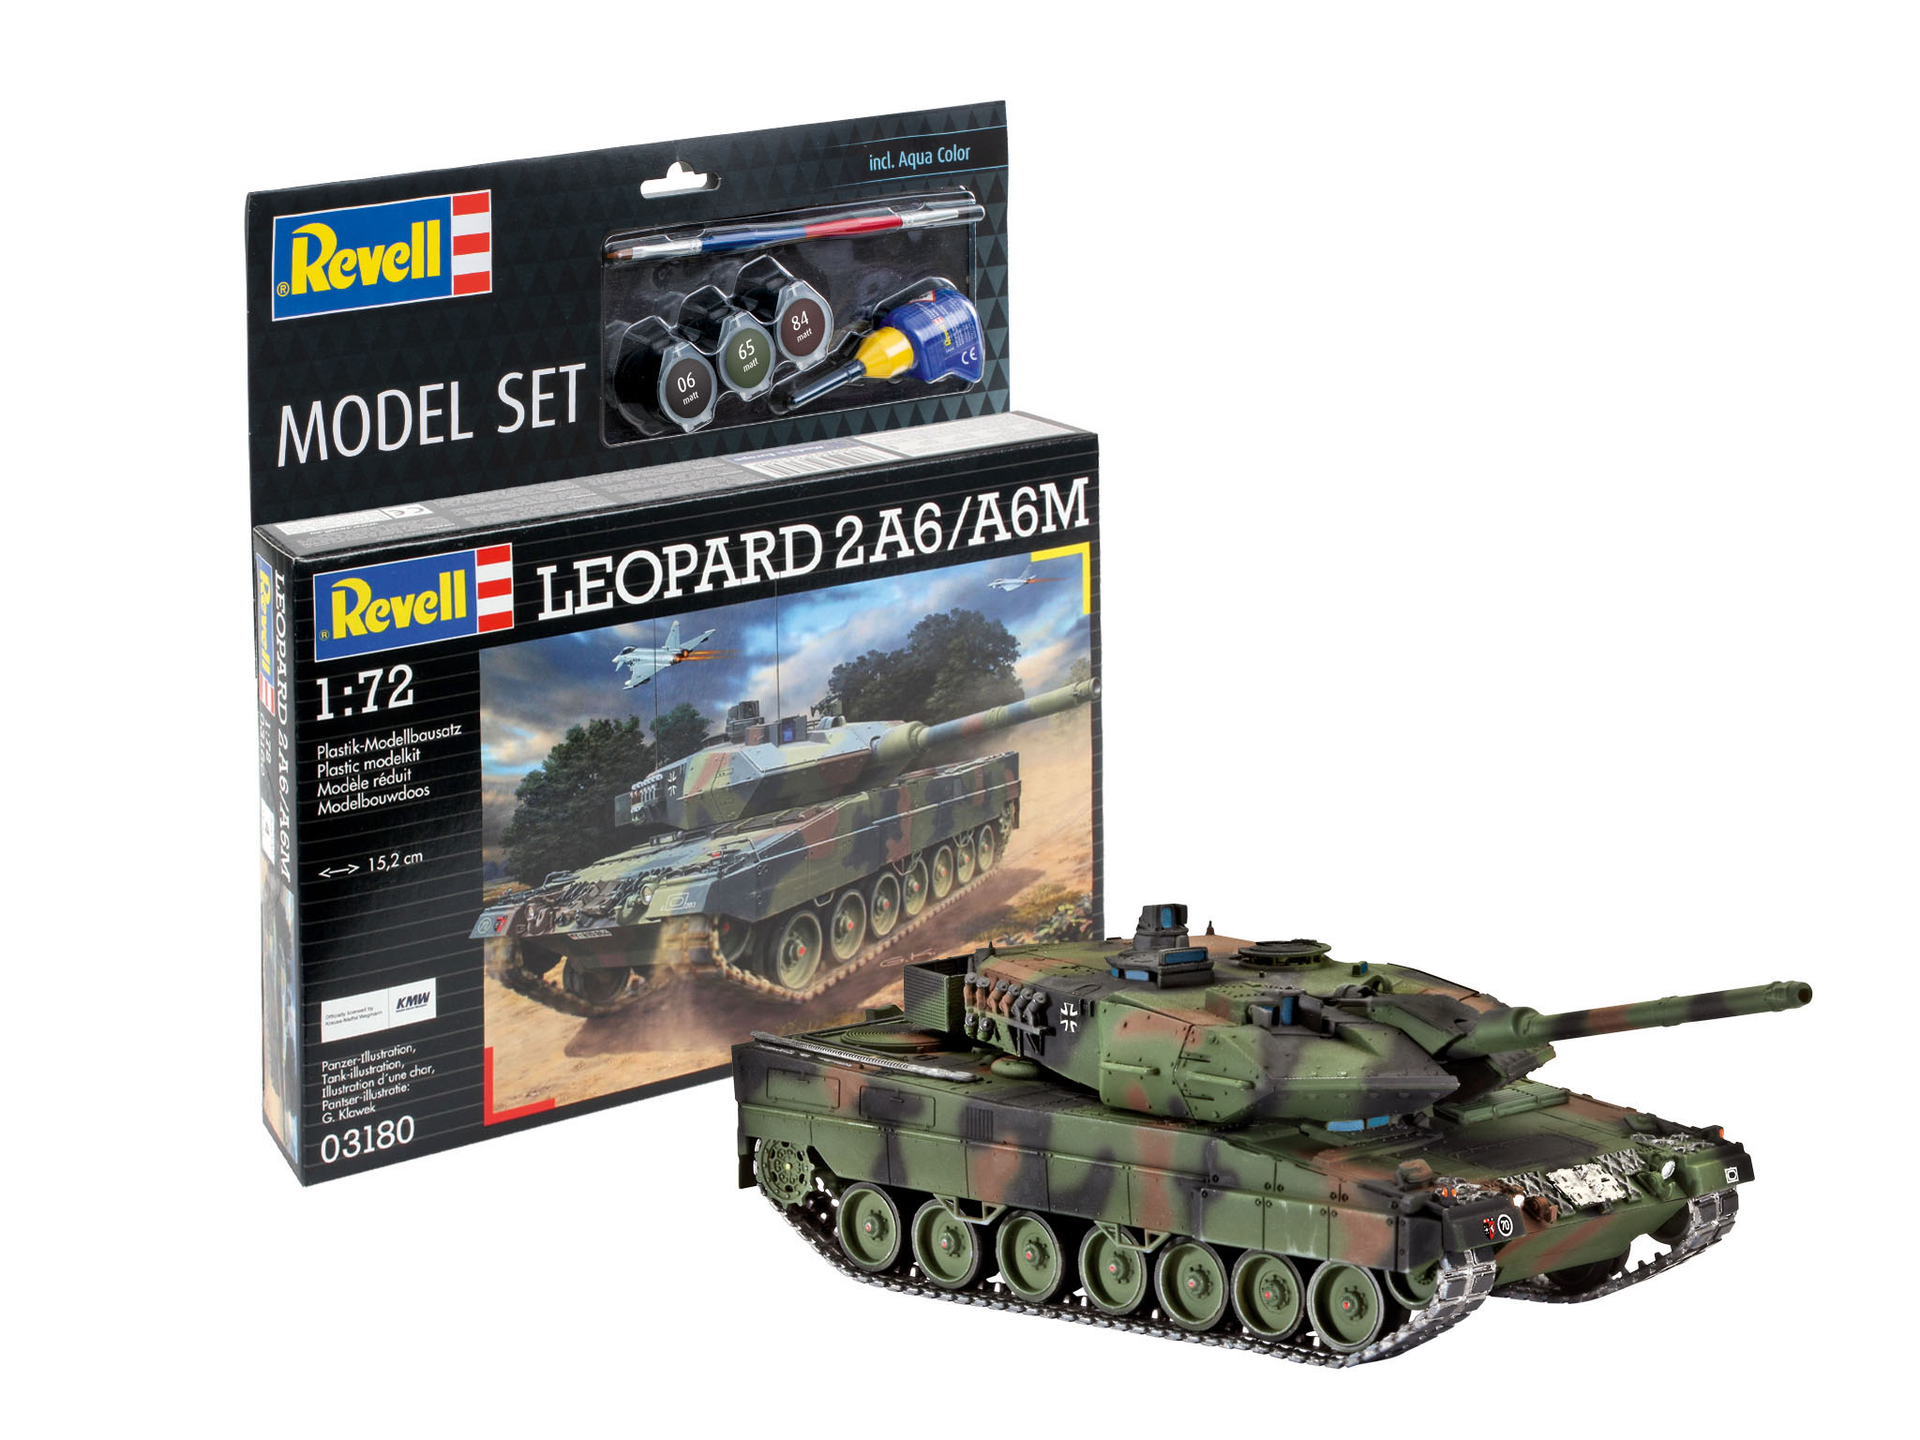 Сборная модель Revell набор Танк Леопард 2A6/A6M масштаб 1:72, 168 деталей (RVL-63180) - фото 2